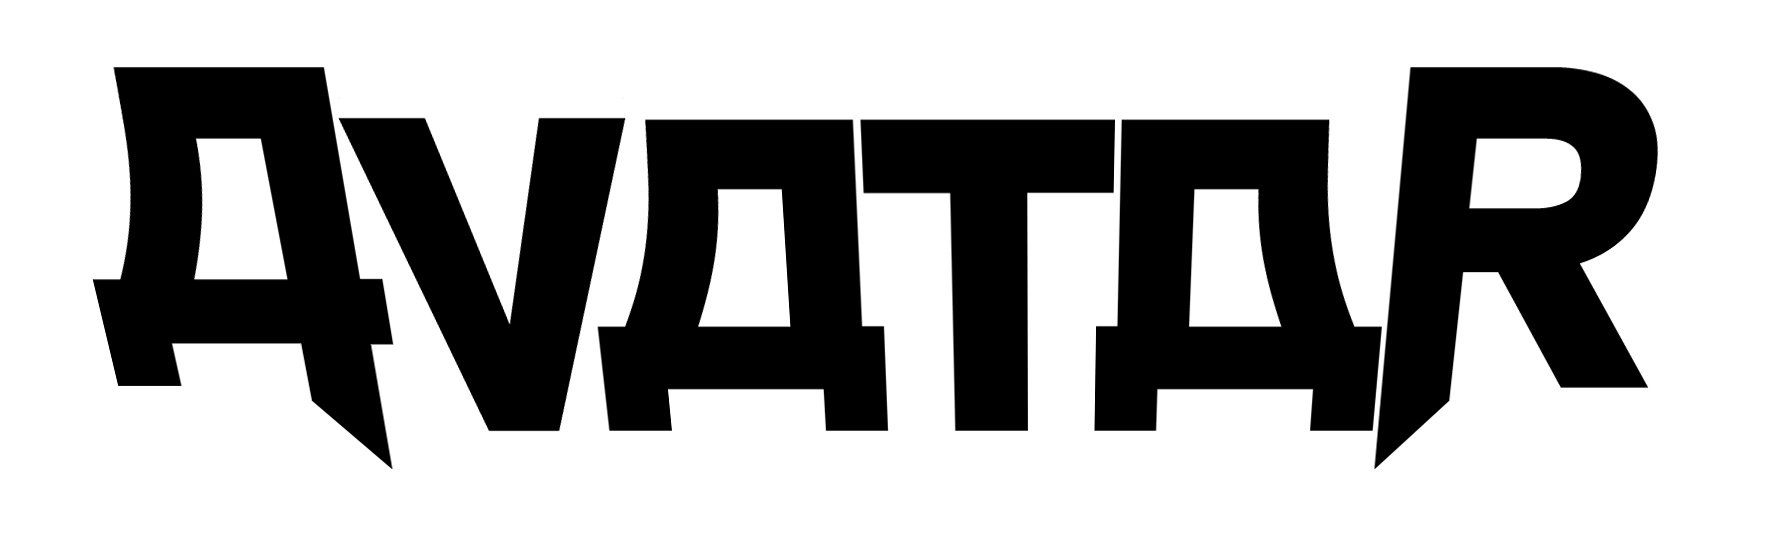 Other Band Logo - File:Avatar (Swedish band) logo.png - Wikimedia Commons